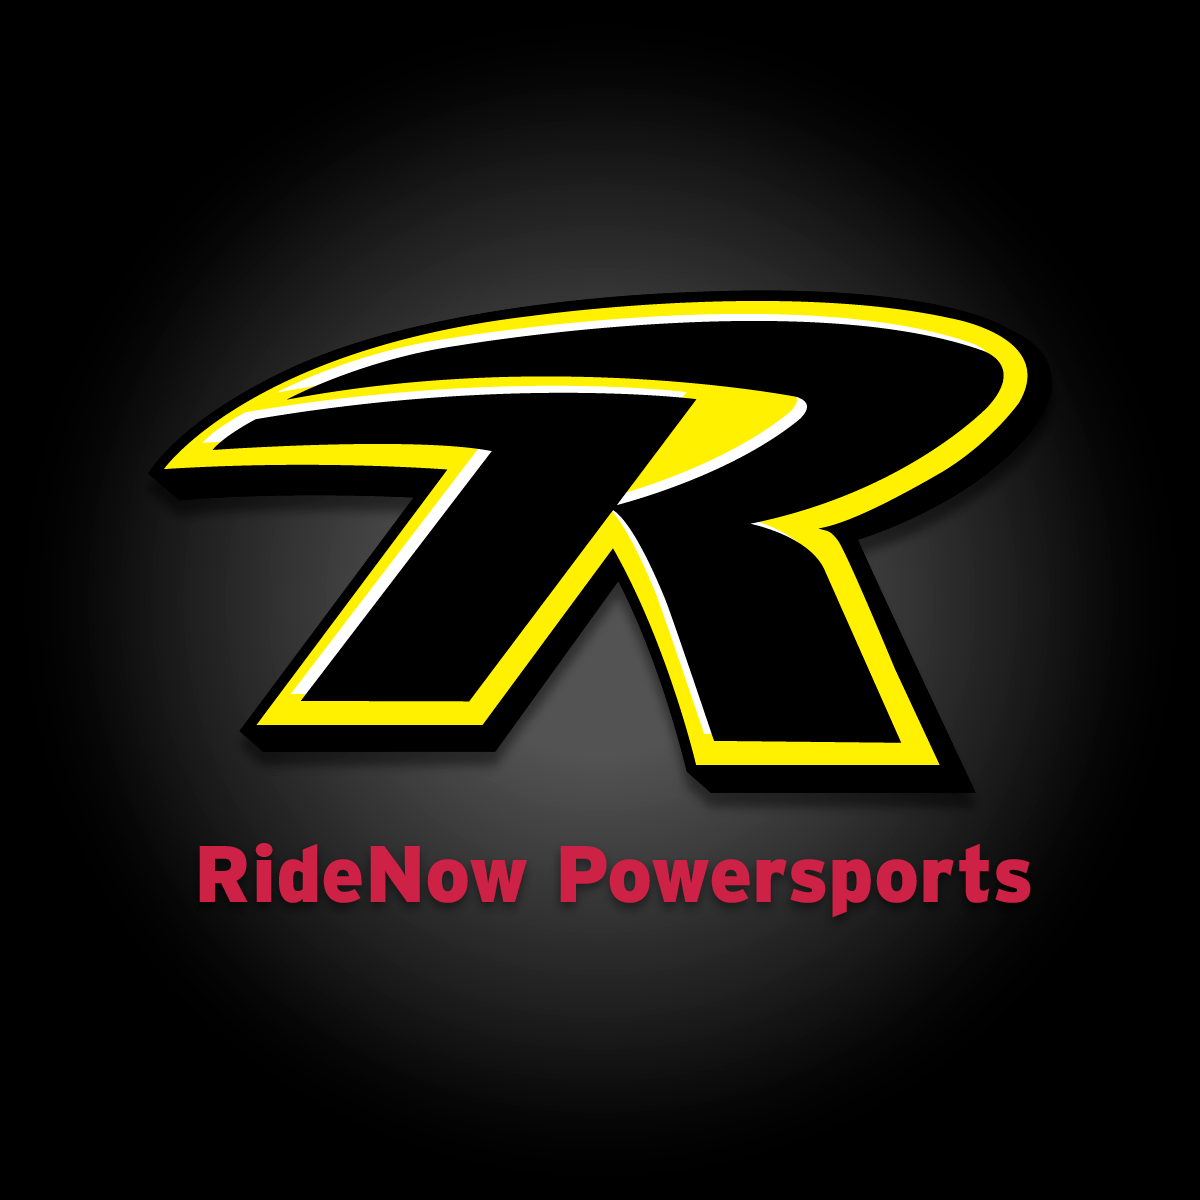 RideNow Powersports McDonough - McDonough, GA 30253 - (770)957-7404 | ShowMeLocal.com